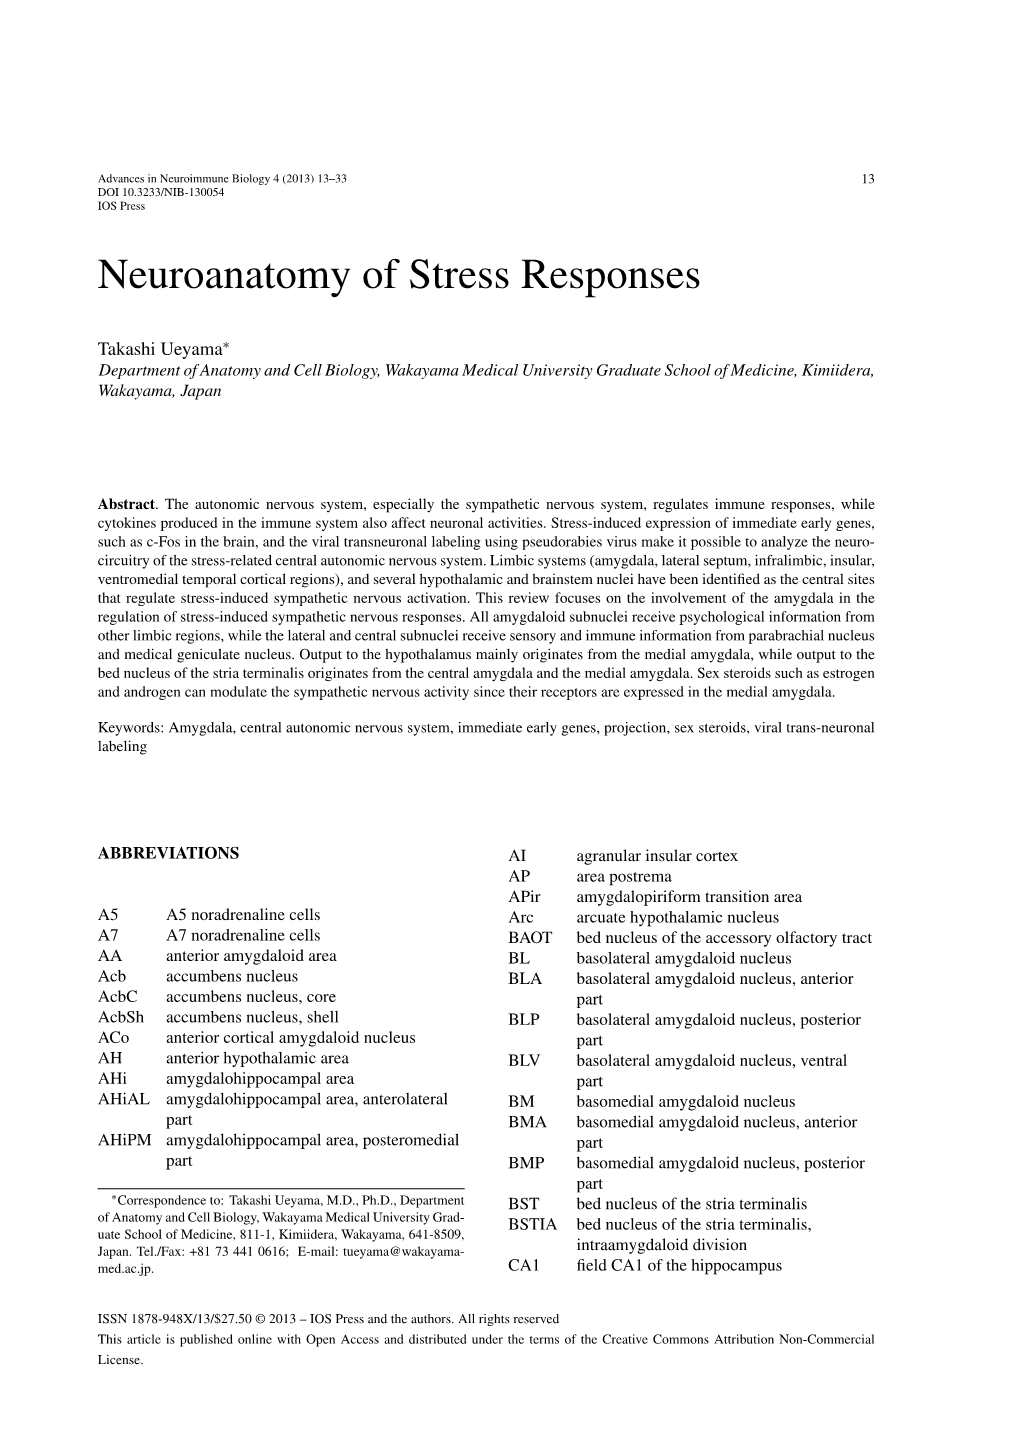 Neuroanatomy of Stress Responses